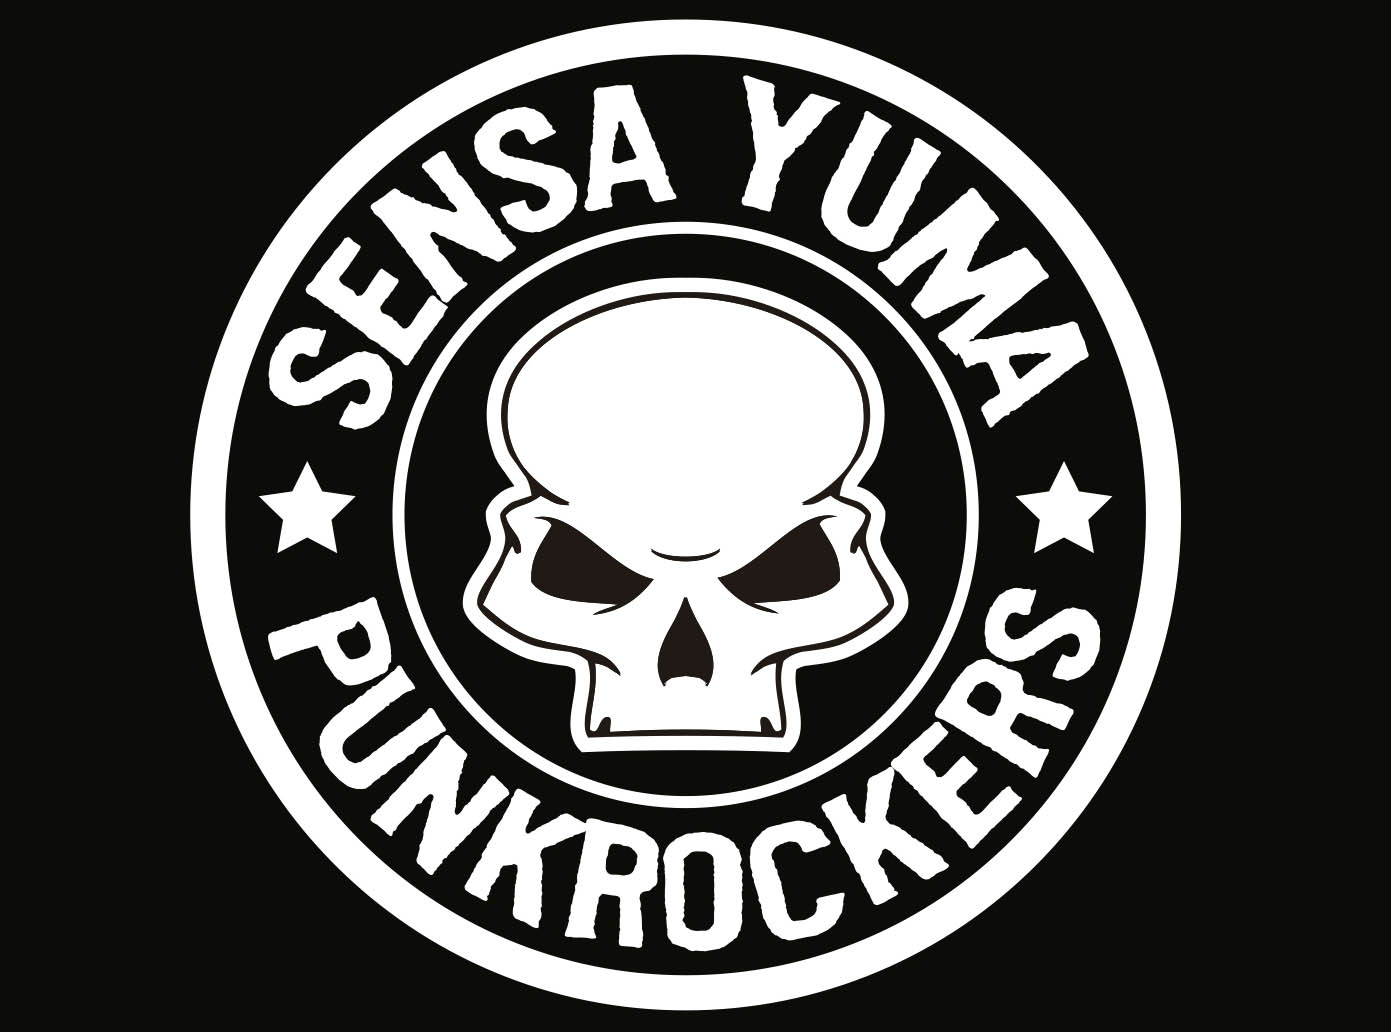 Ya puedes escuchar íntegramente Punkrockers, quinto álbum de Sensa Yuma